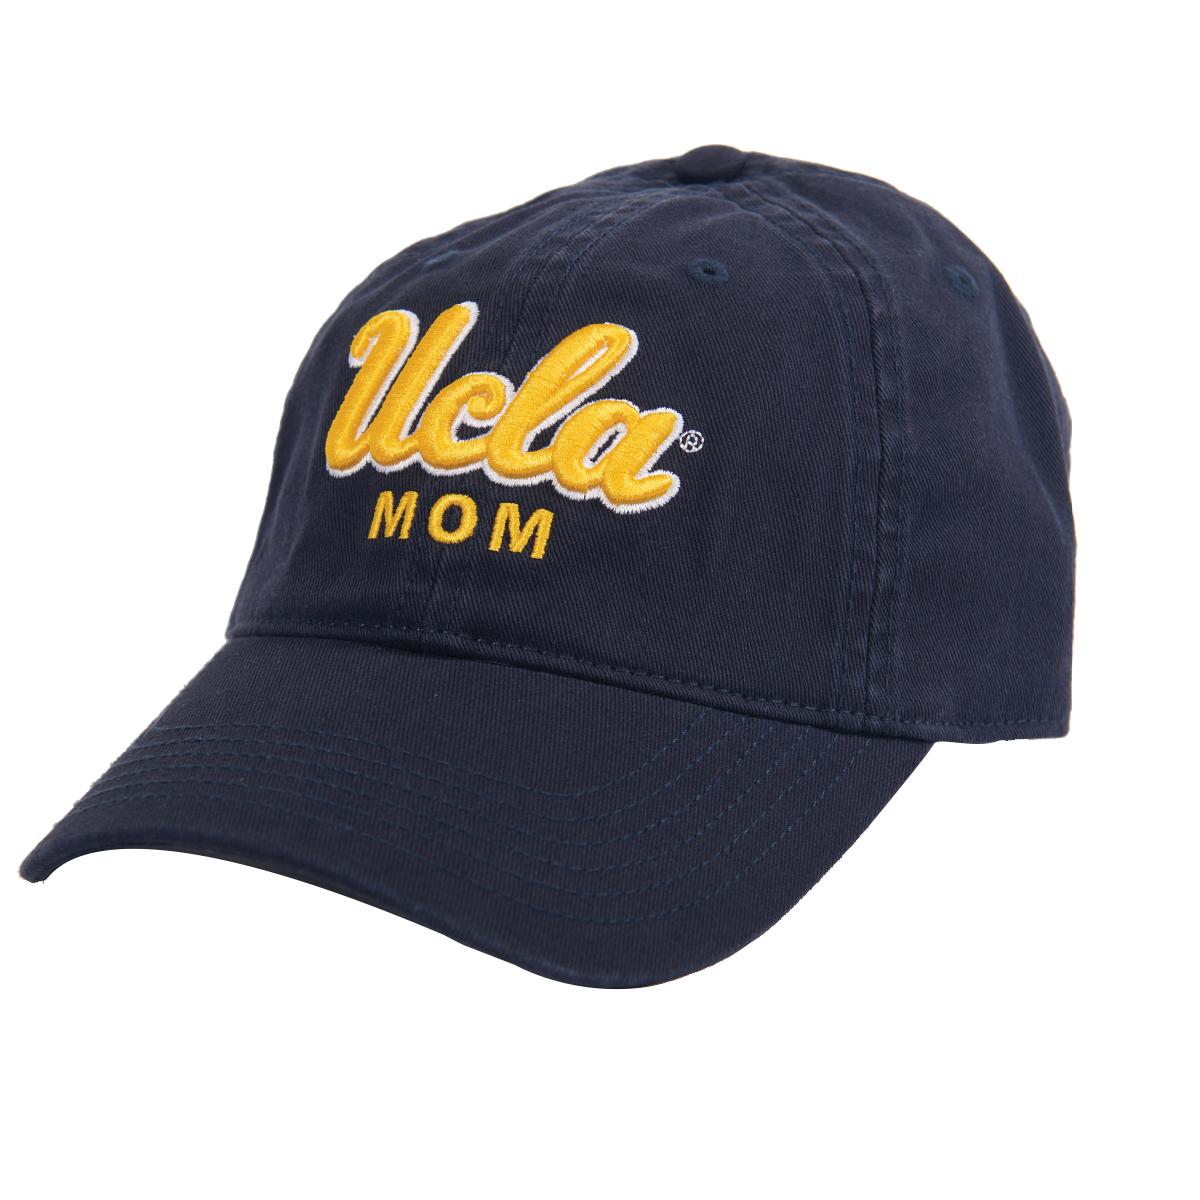 UCLA Mom baseball cap